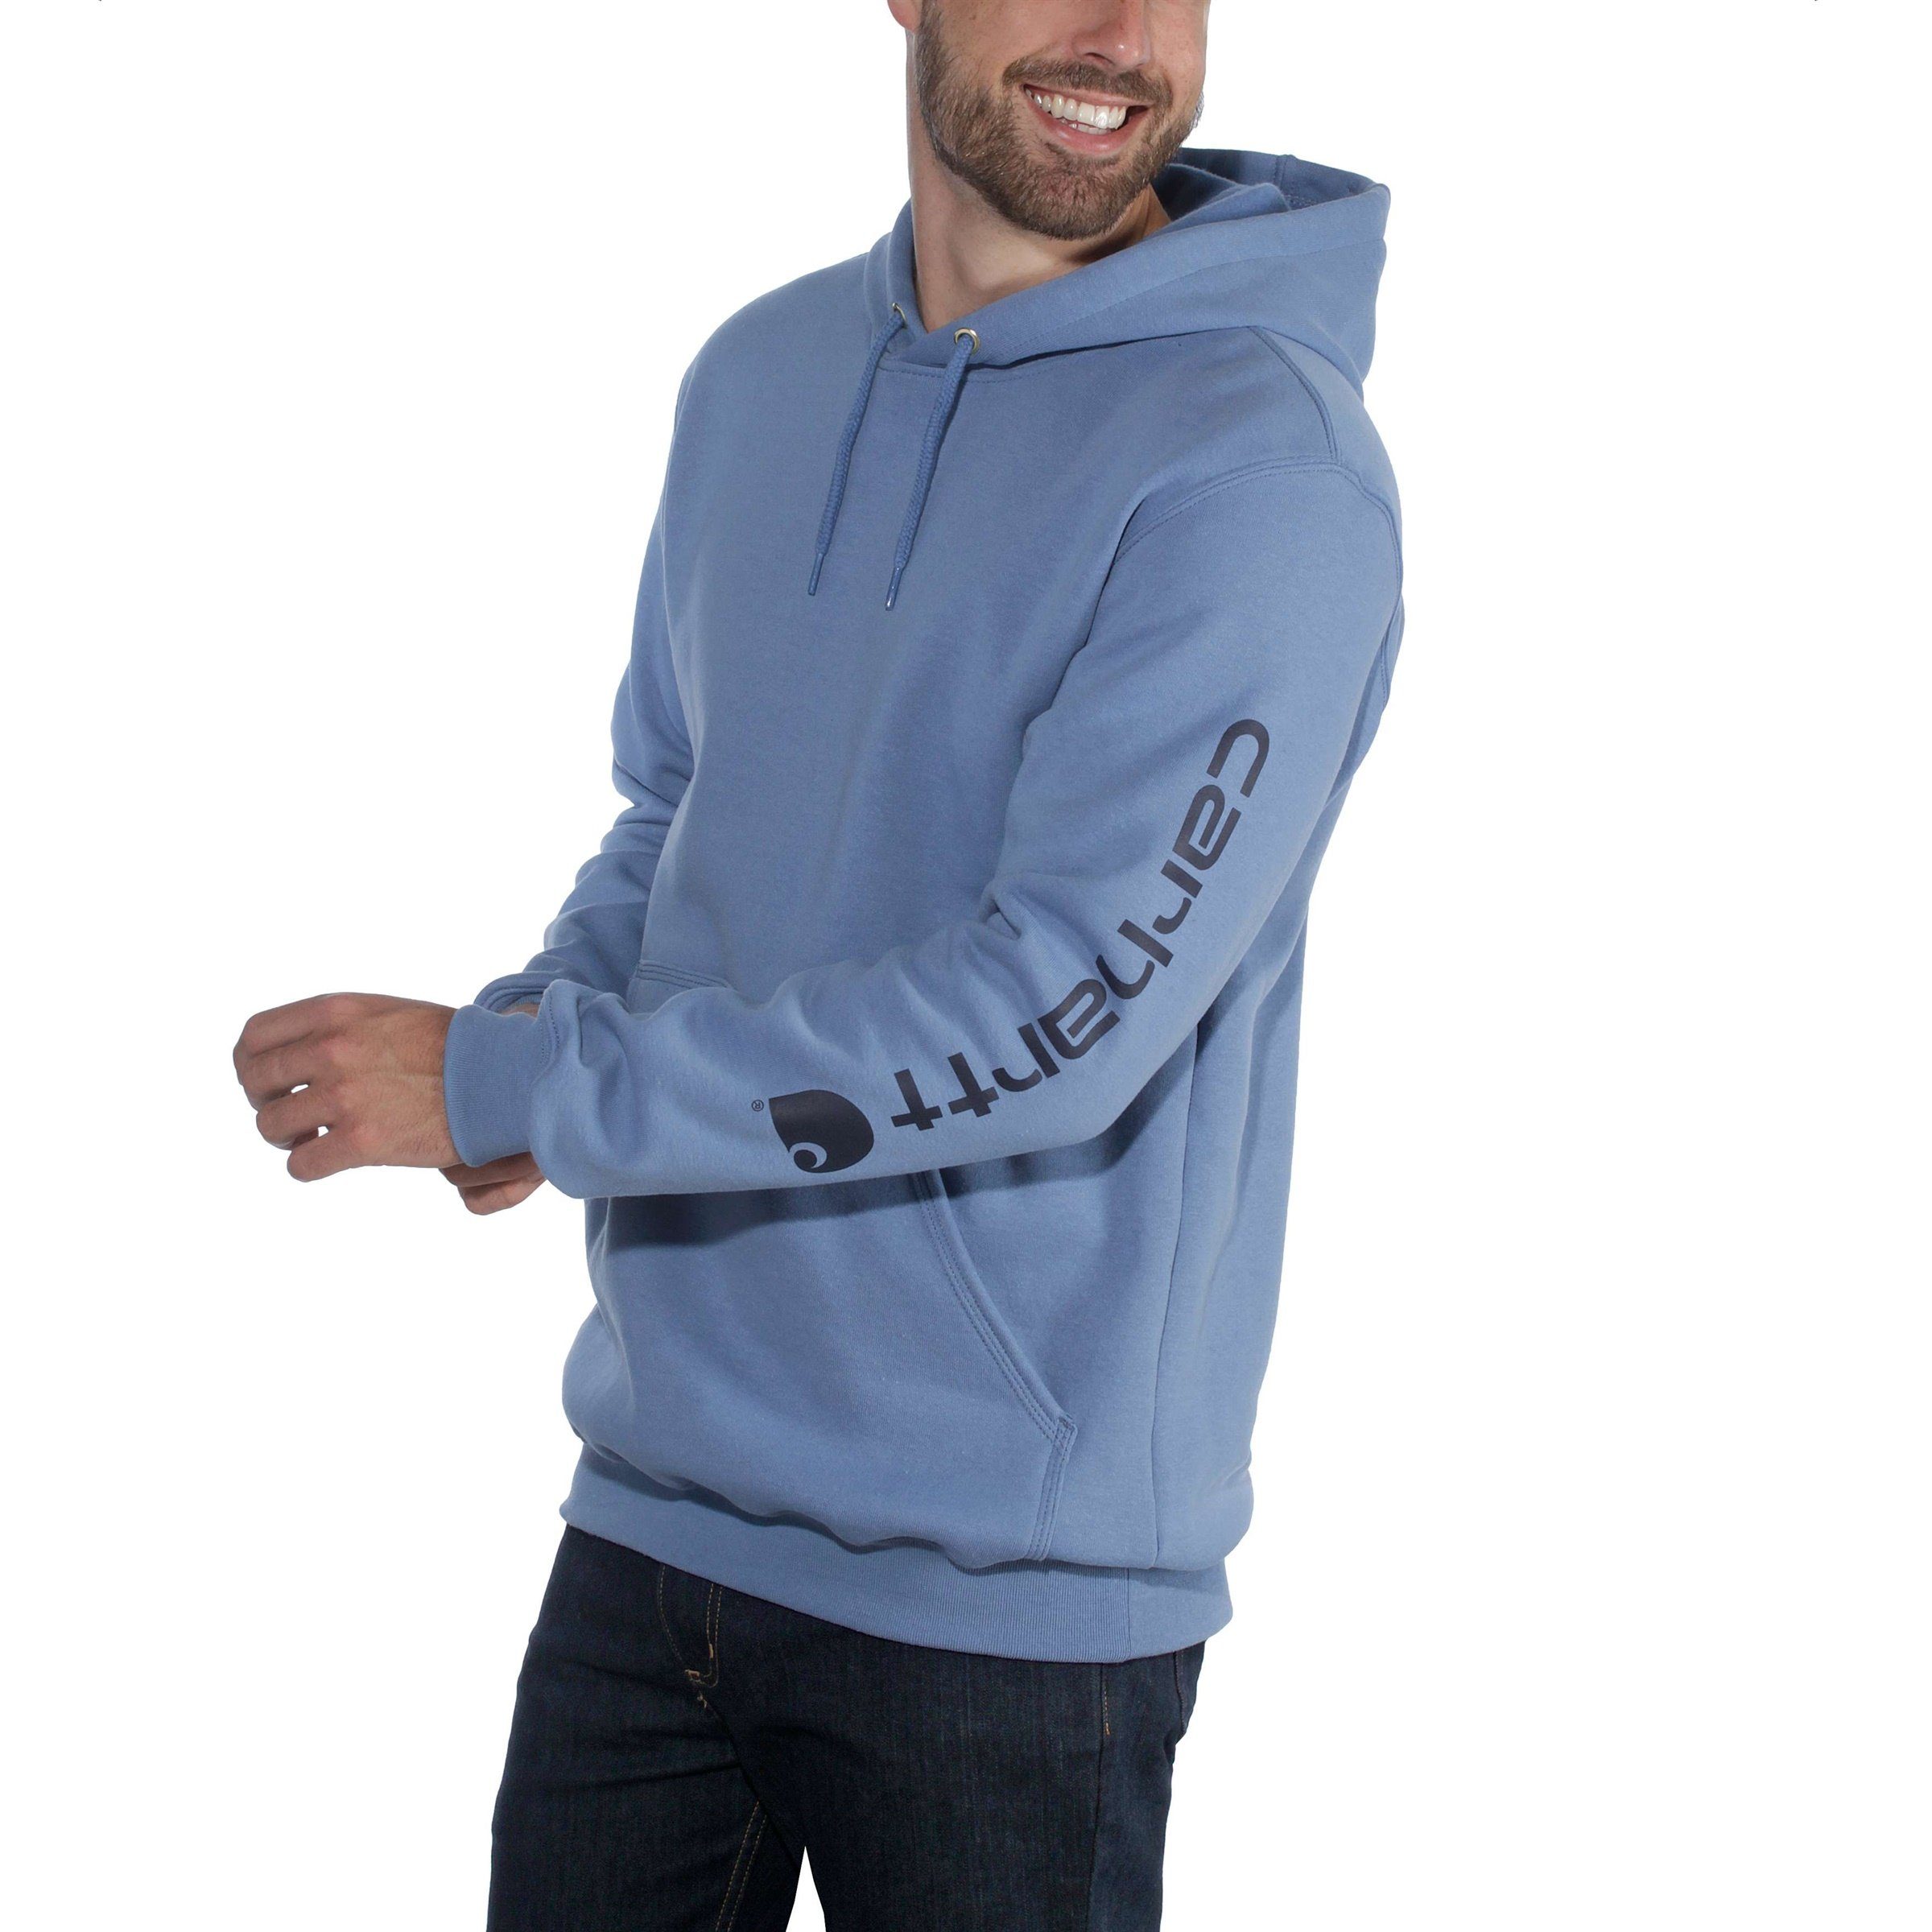 Carhartt Hoodie Carhartt Herren Kapuzenpullover scout Loose blue Graphic Sweatshirt Midweight Logo Sleeve Fit heather